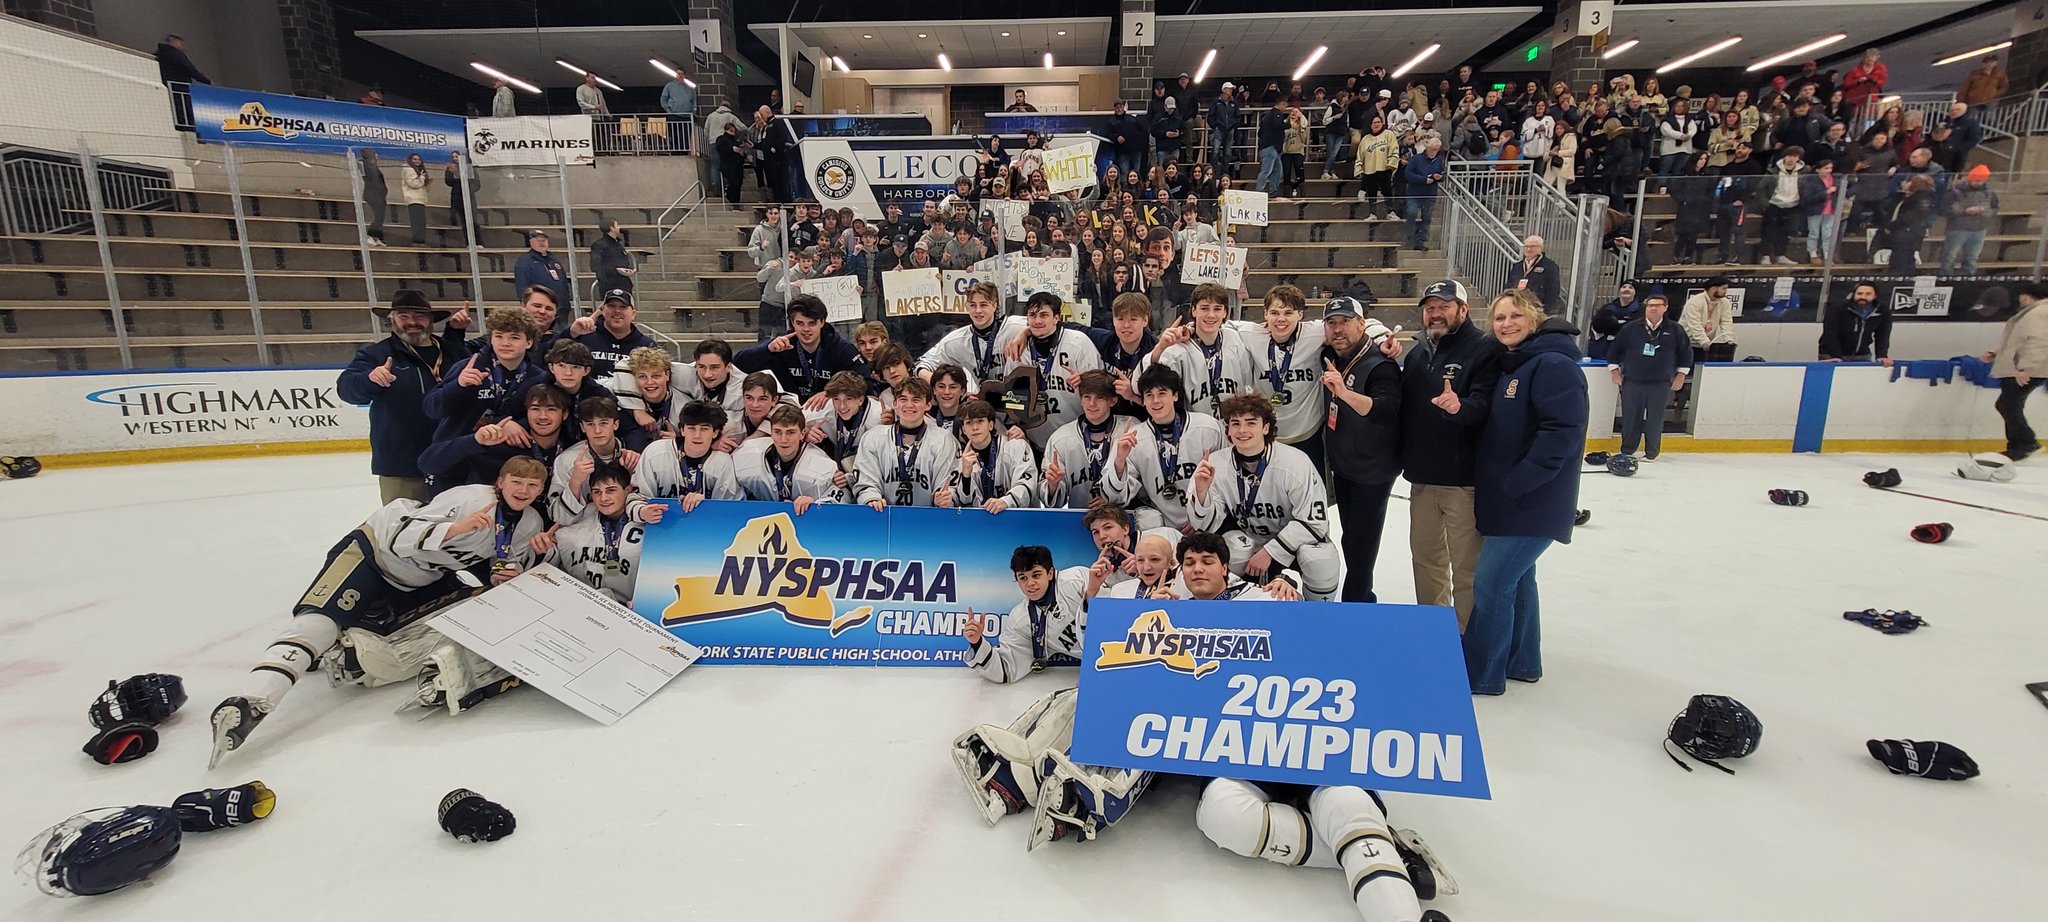 Boys Hockey Team Celebrates Winning the State Championship